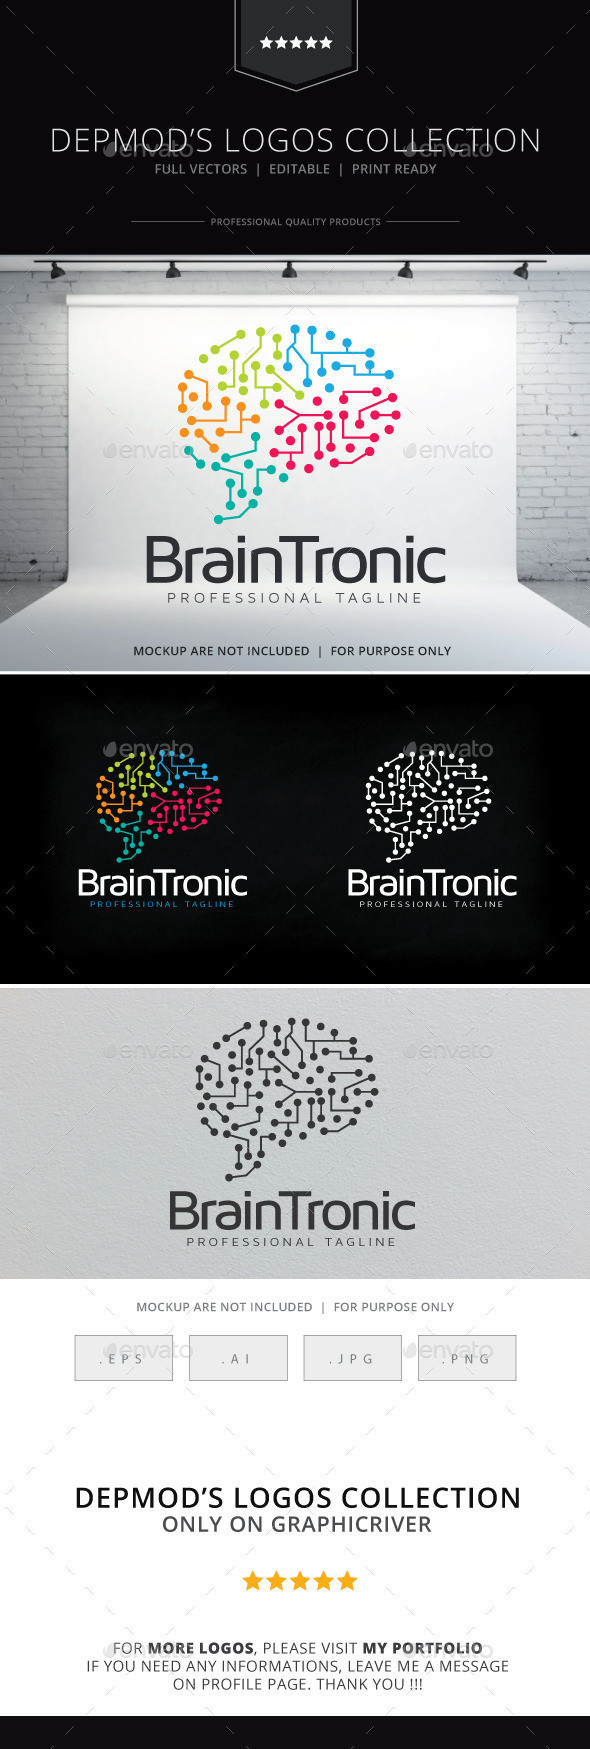 Braintronic logo